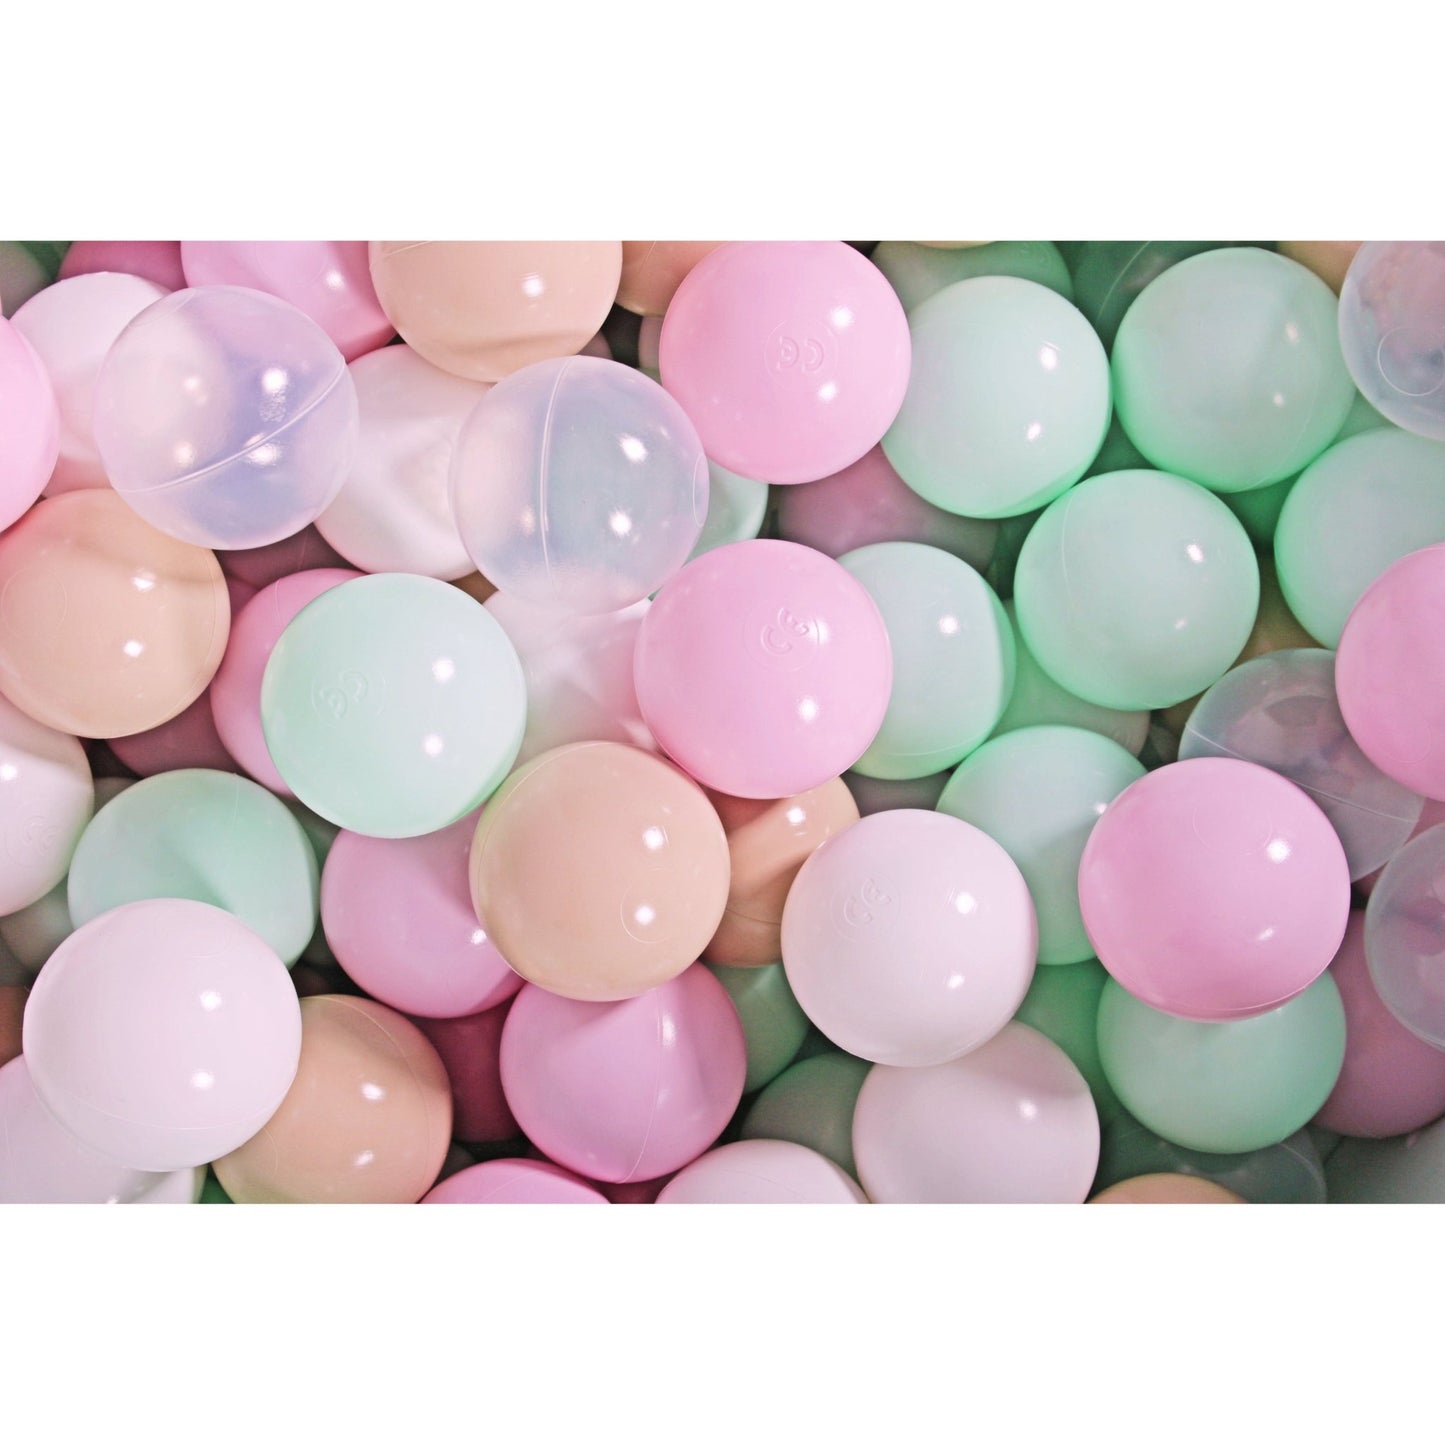 Green Velvet Round Foam Ball Pit - Select Your Own Balls